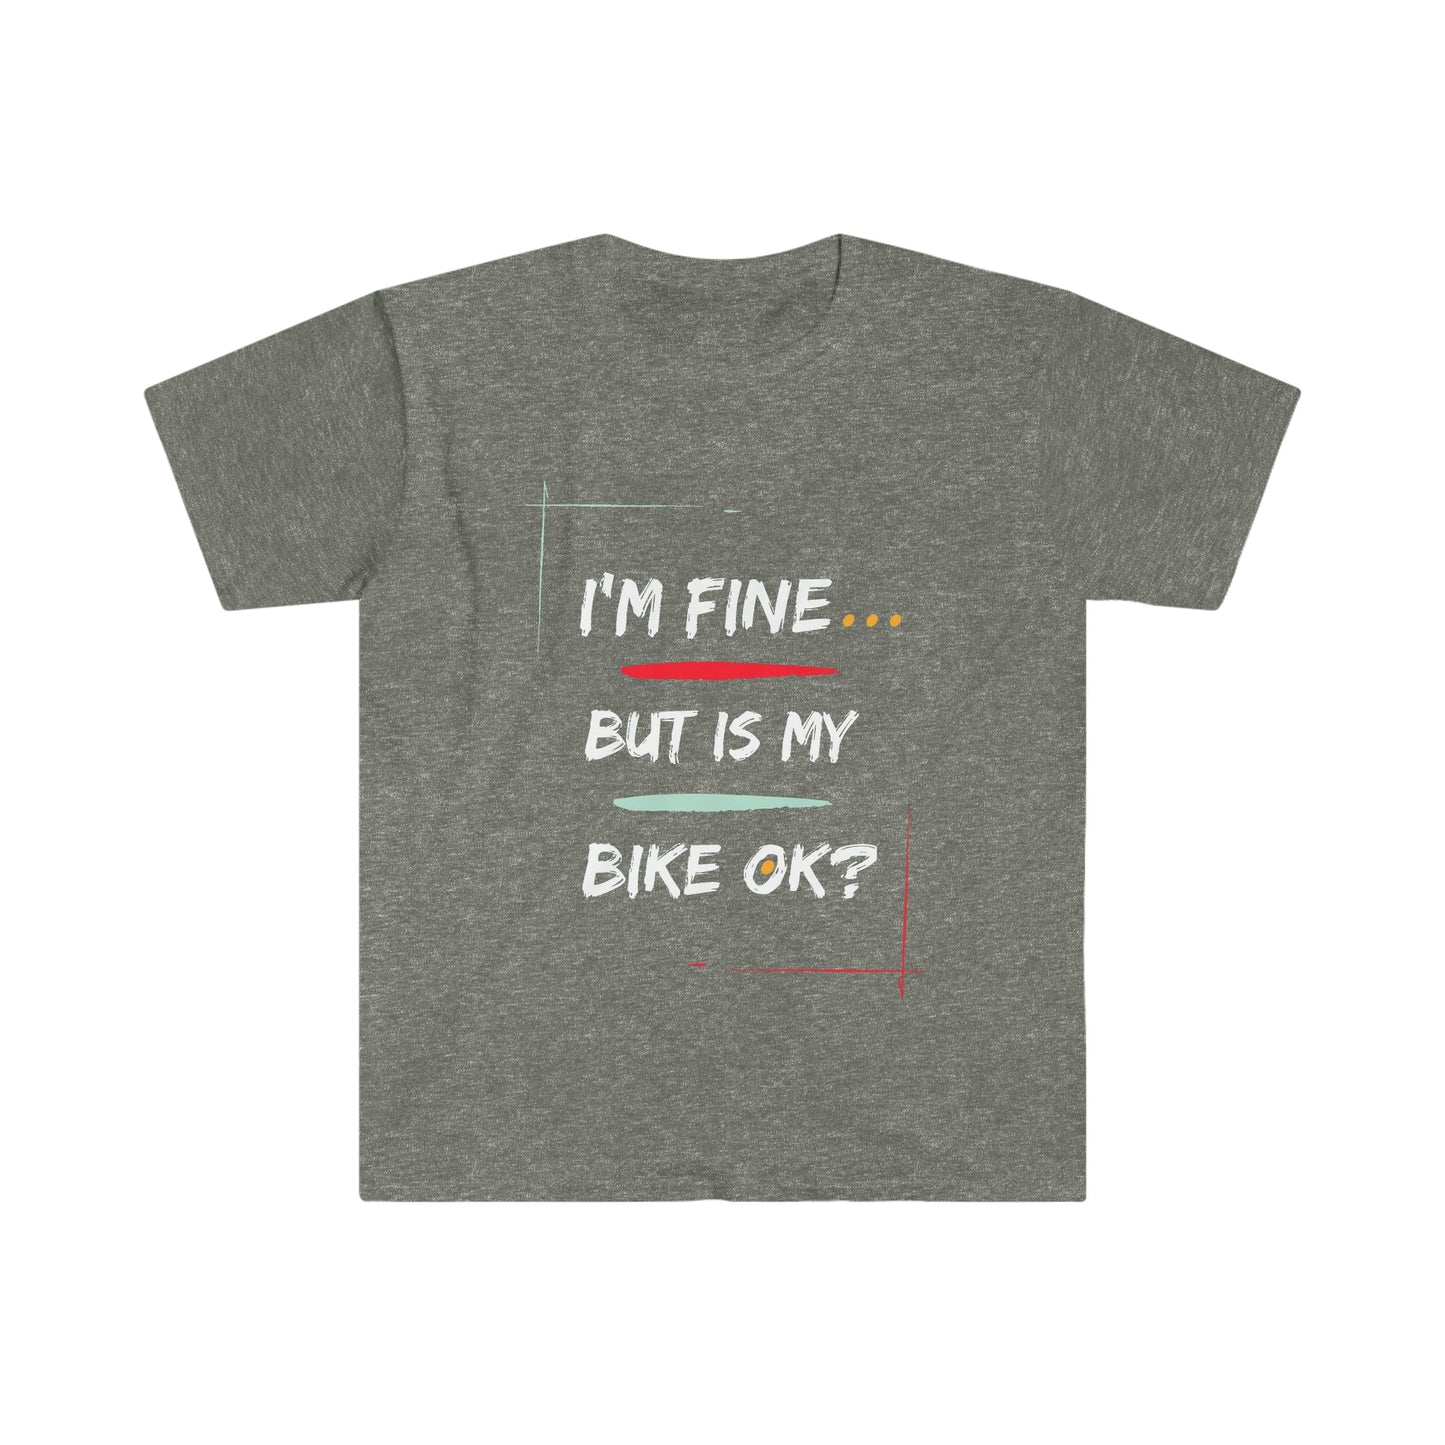 Is My Bike OK? -Unisex T-Shirt